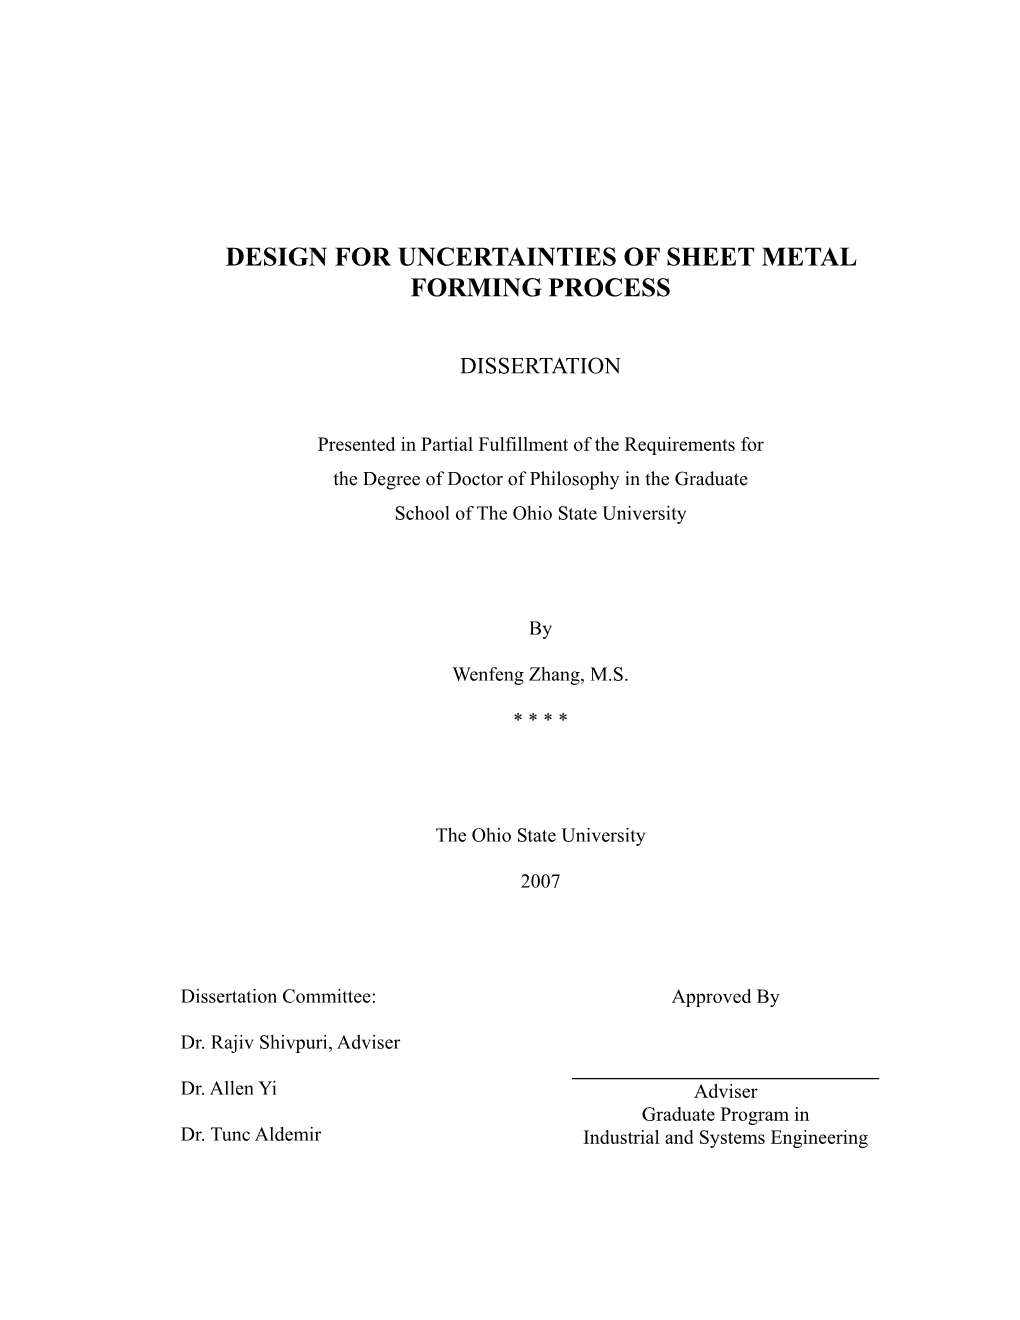 Design for Uncertainties of Sheet Metal Forming Process